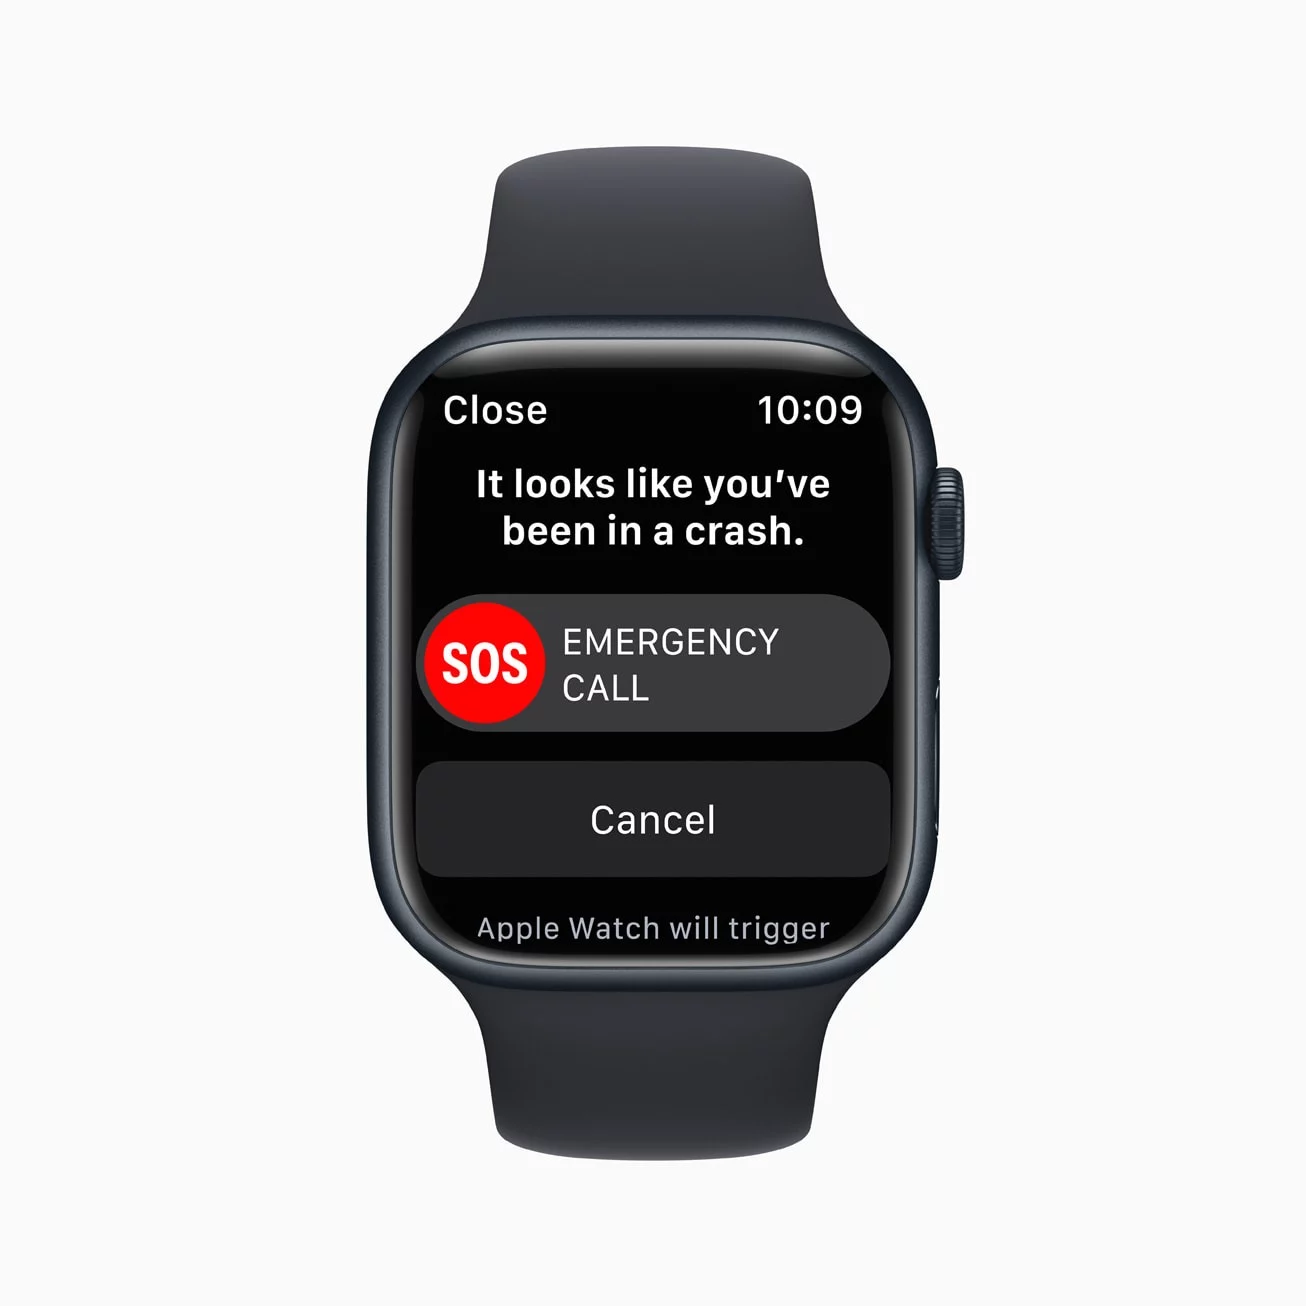 Apple Watch S8 Crash Detection e jpeg